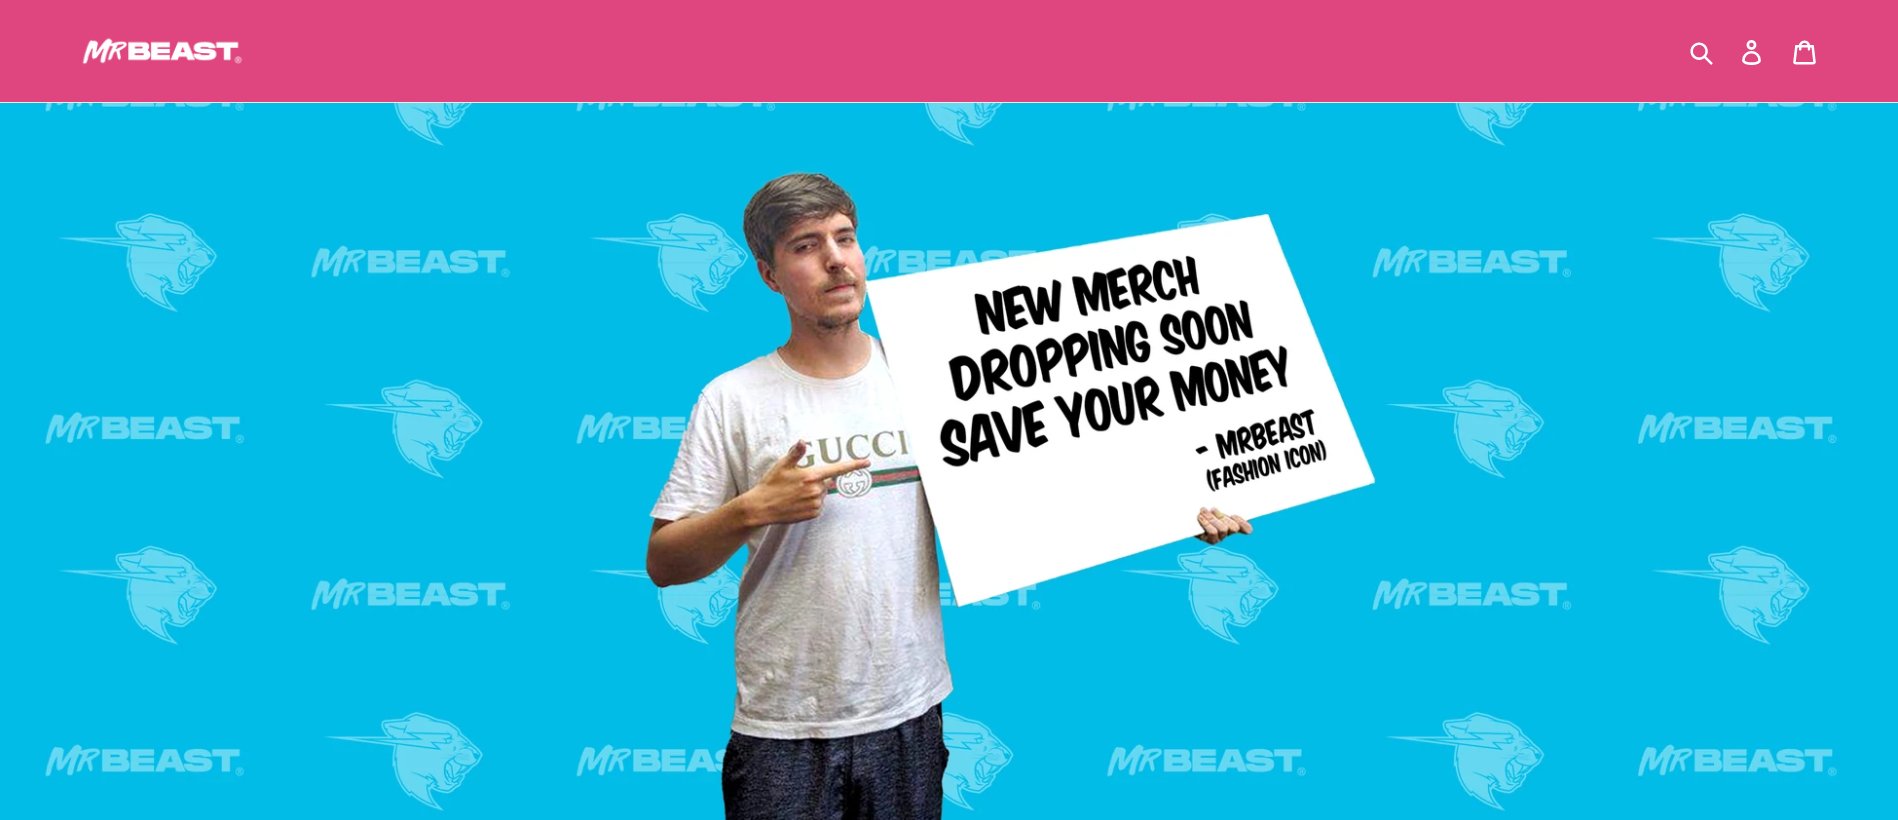 Mr Beast merchandise- MrBeast net worth